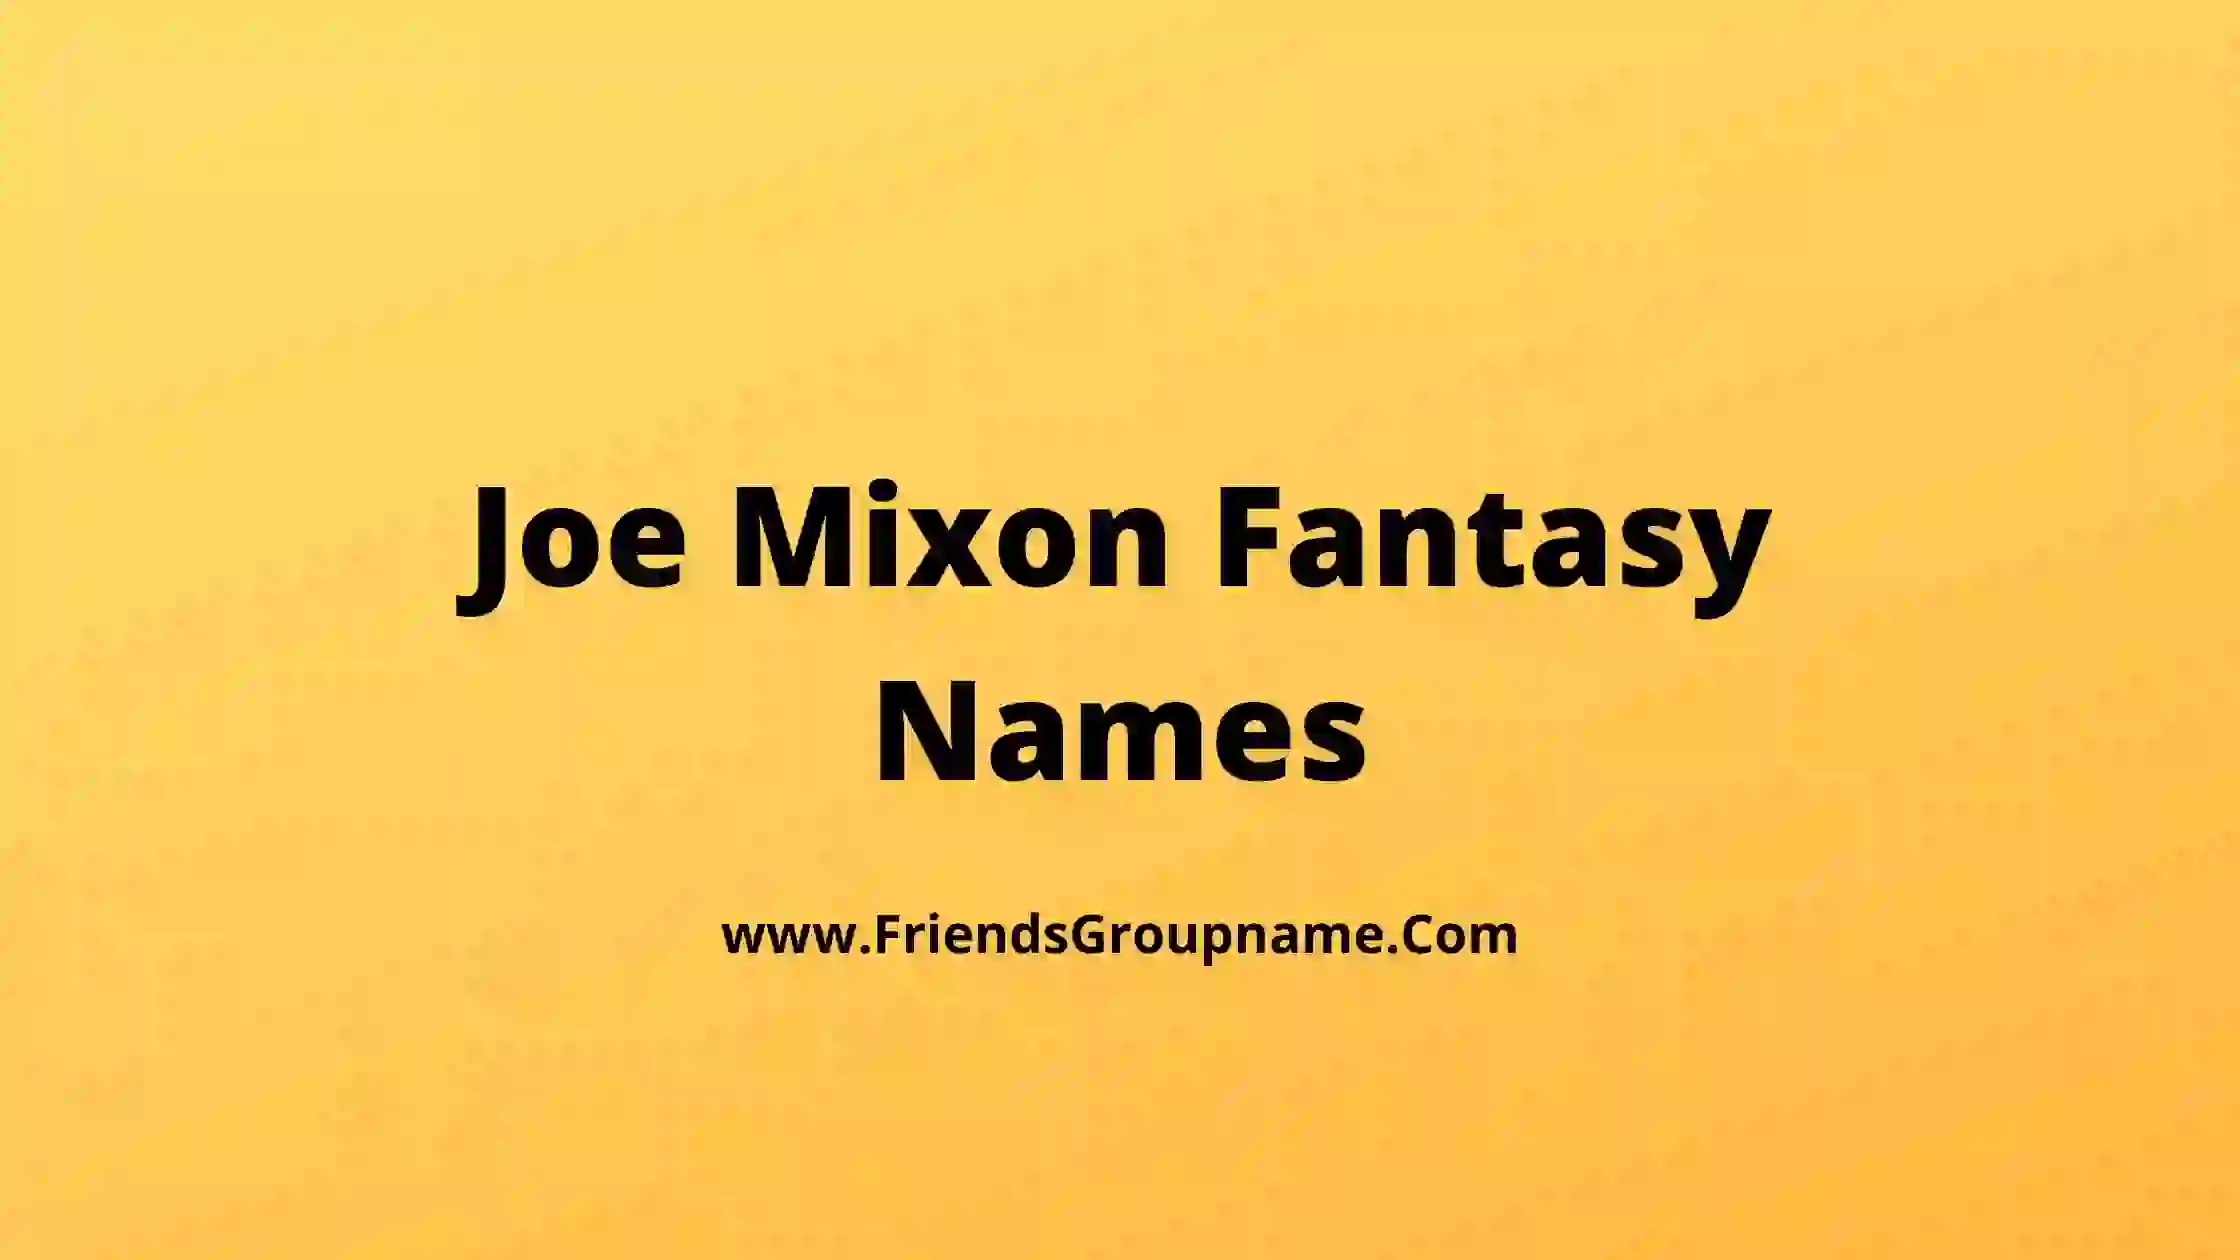 Joe Mixon Fantasy Names